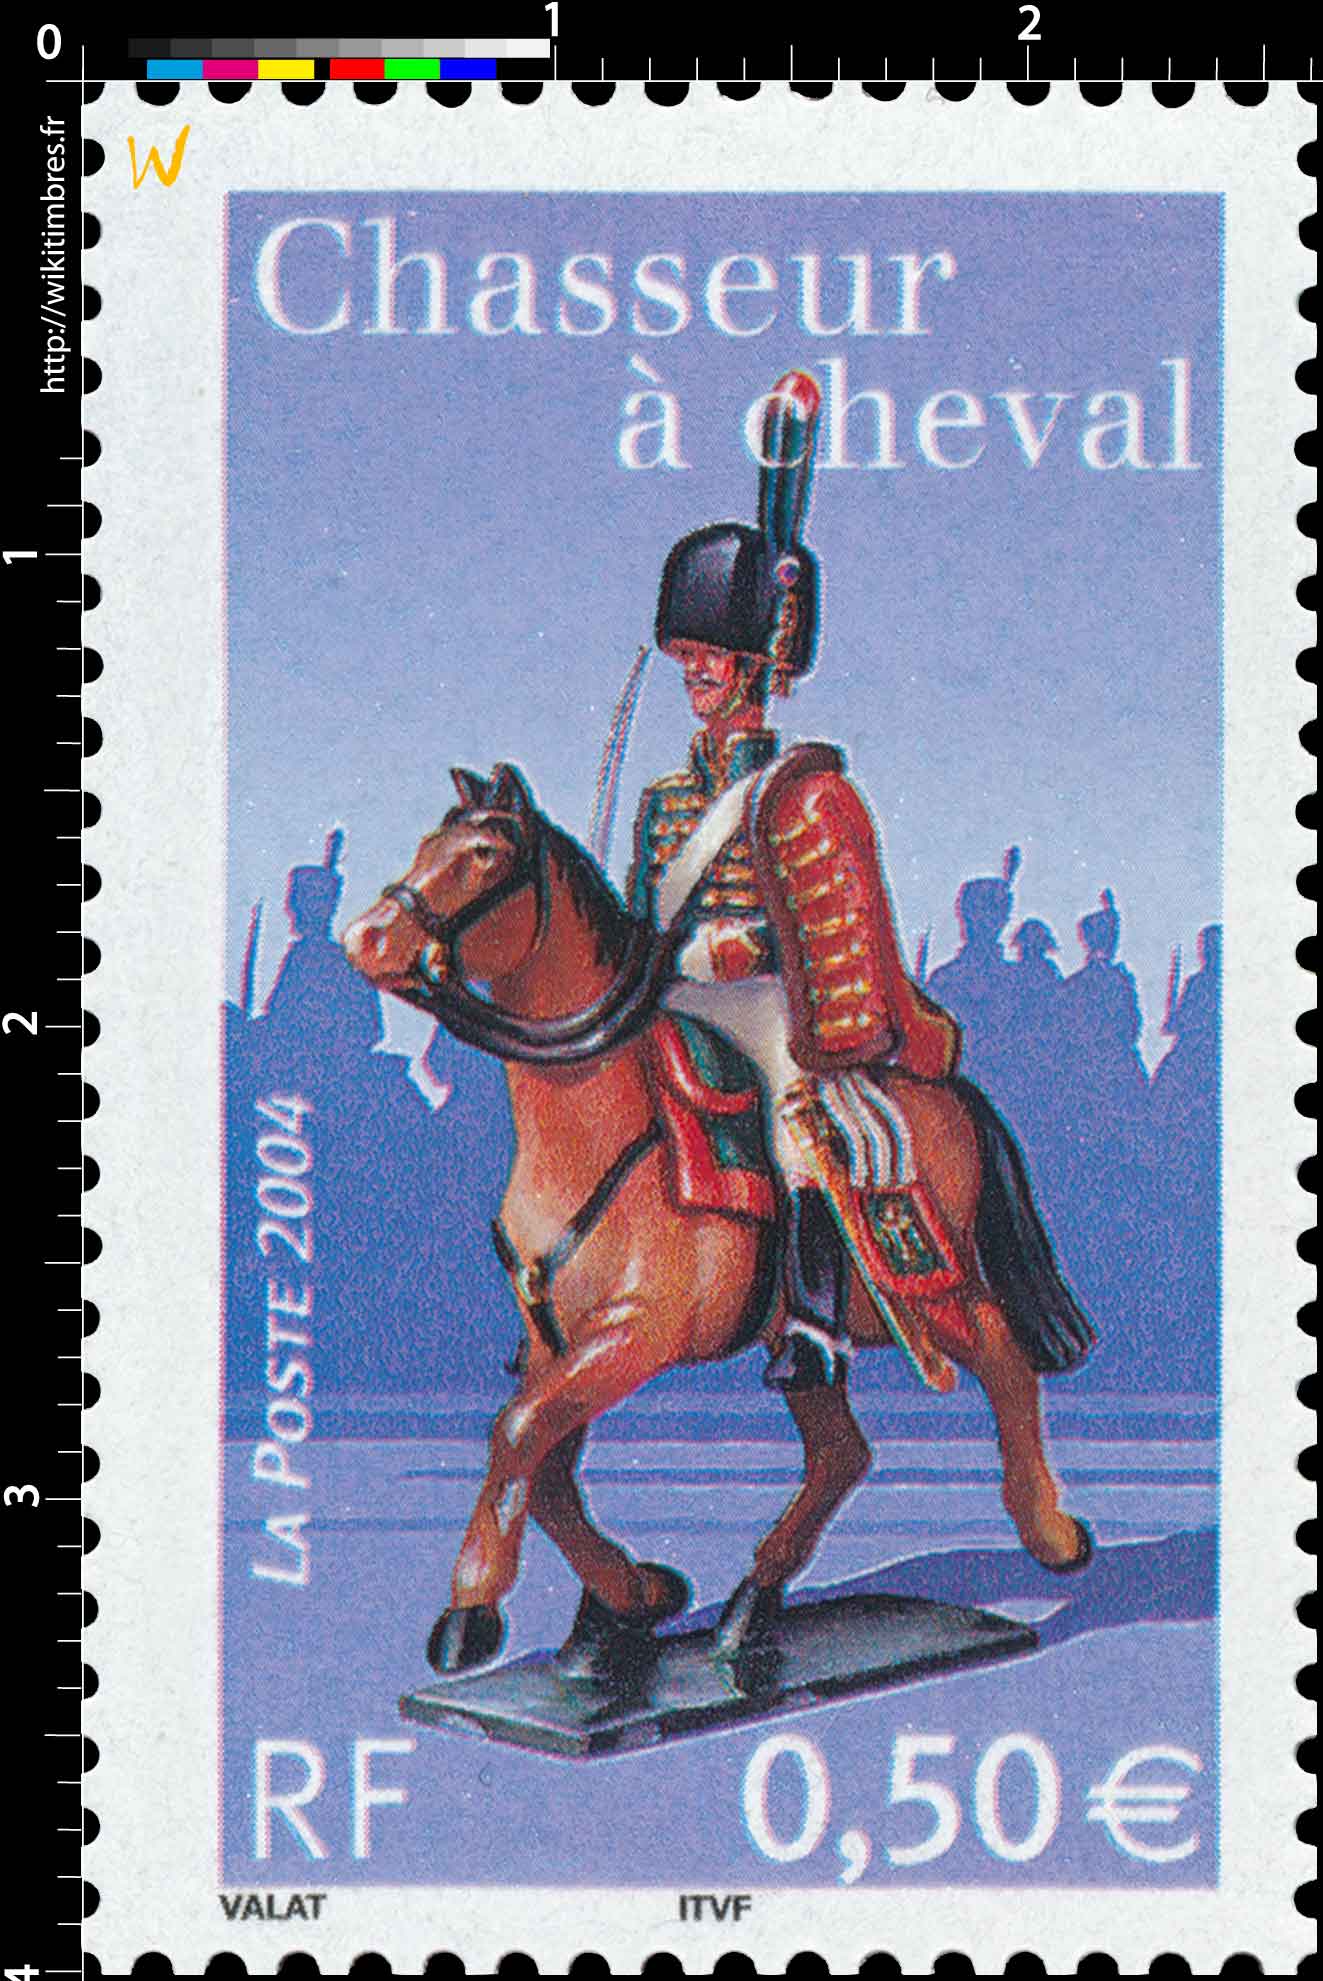 2004 Chasseur à cheval